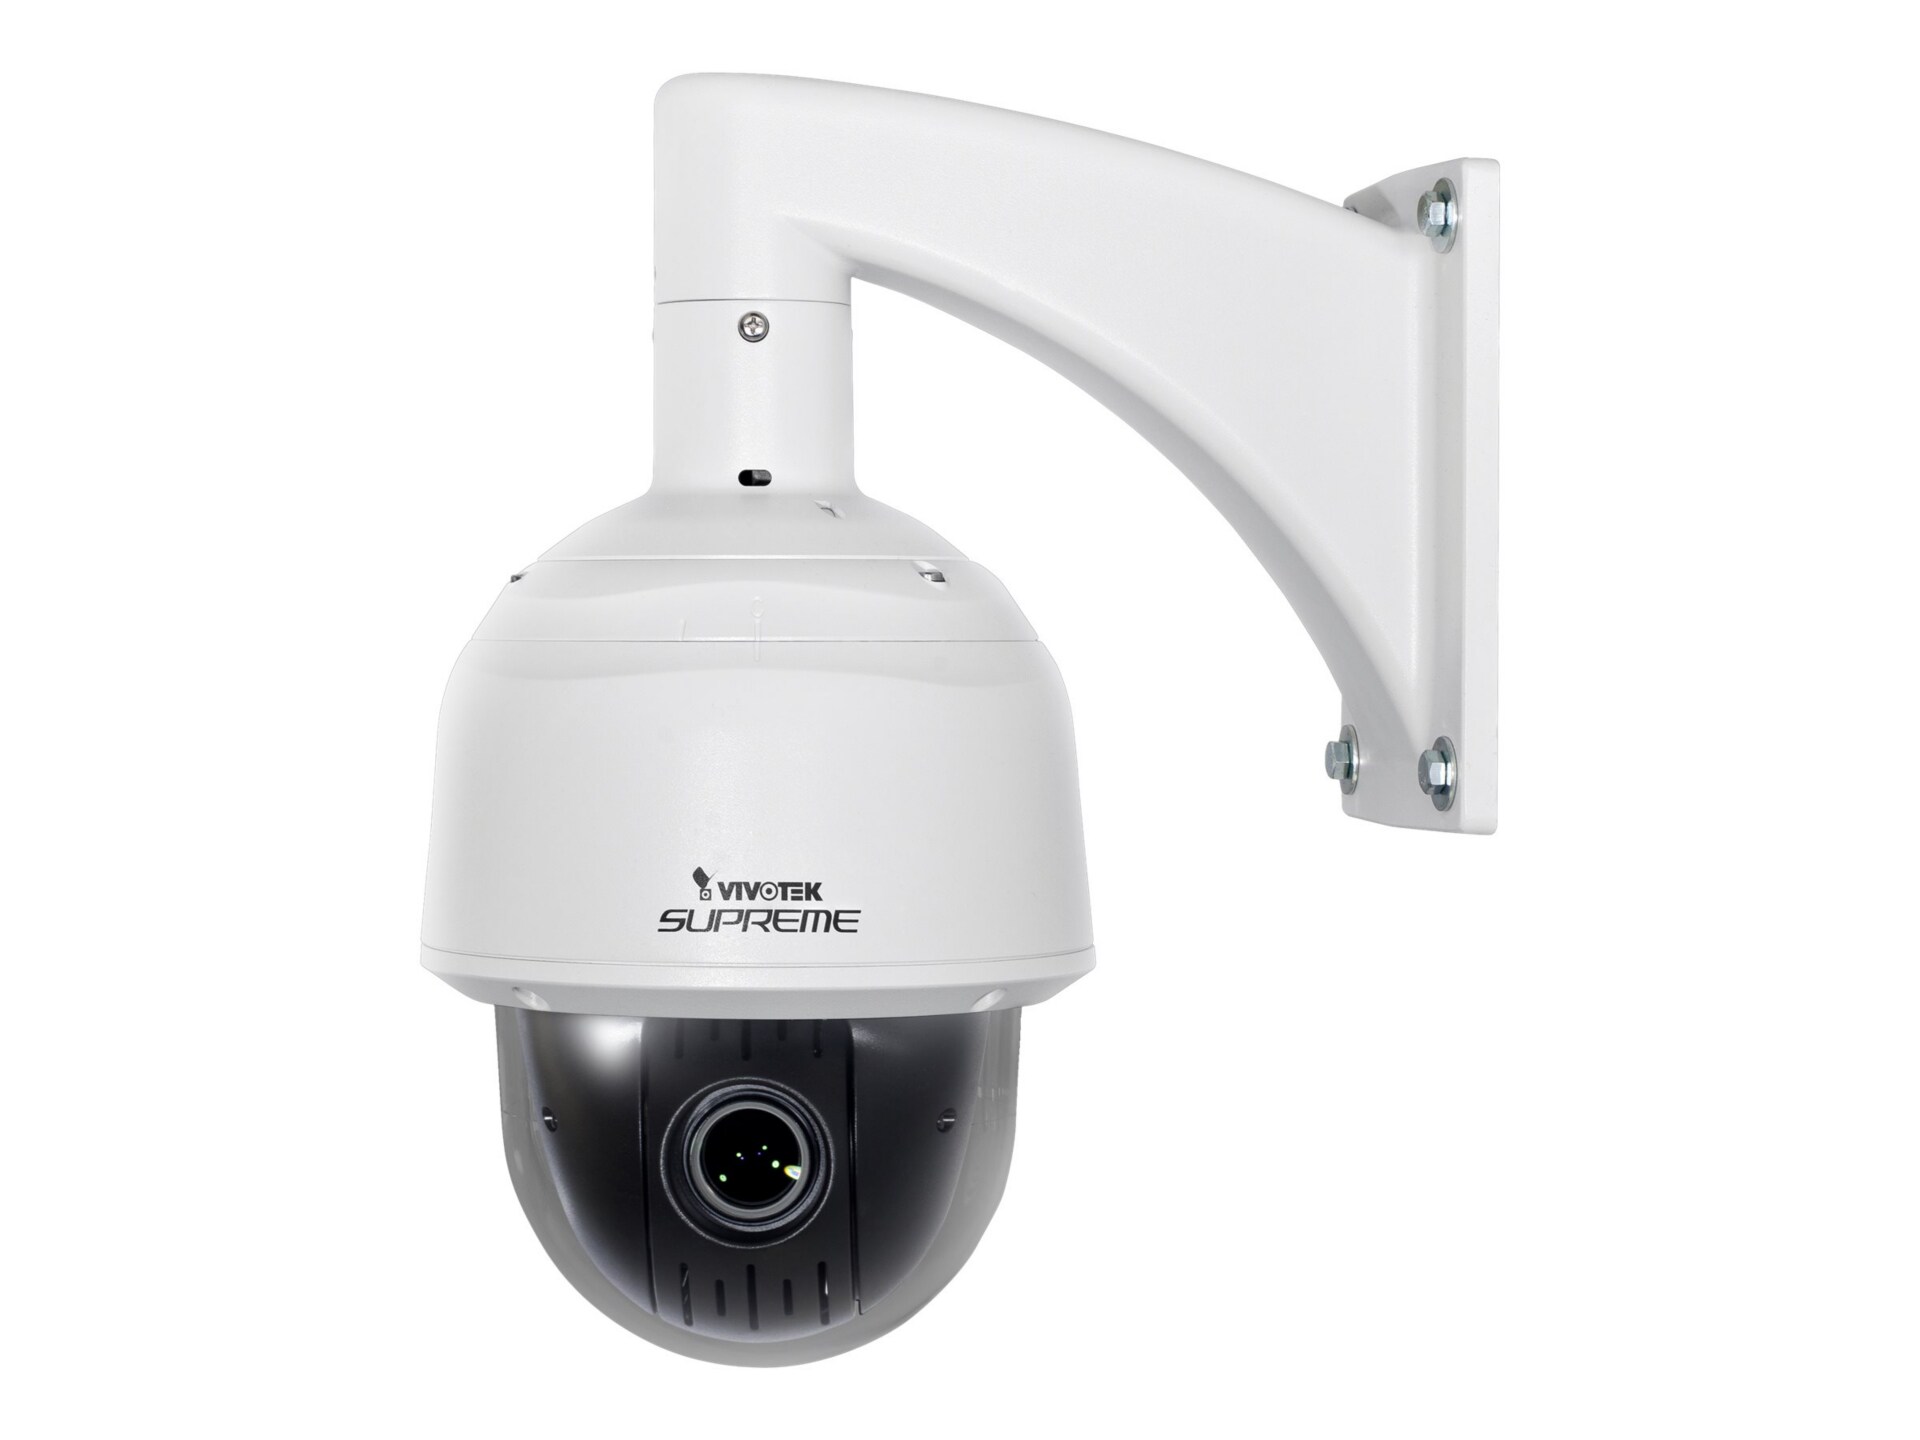 Vivotek SD8364E - network surveillance camera